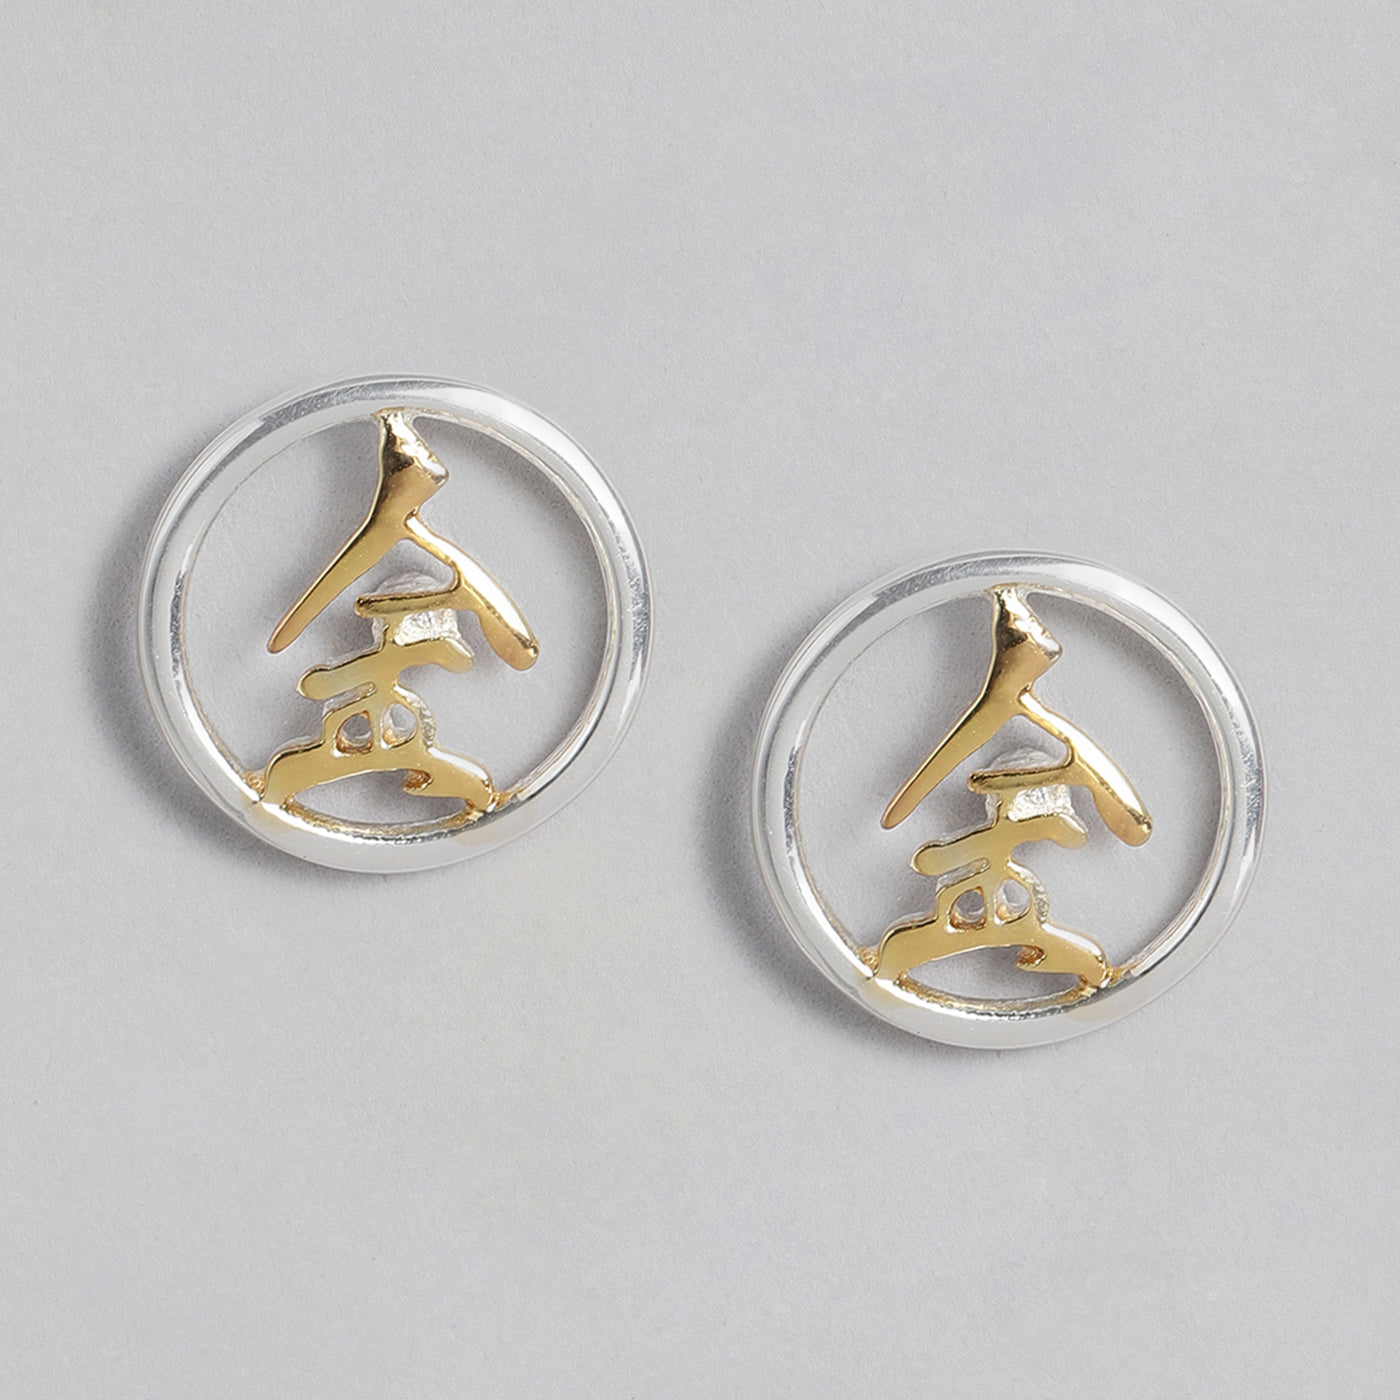 Estele Gold & Rhodium Plated Chinese Astrological "Metal" Symbol Pendant Set for Women